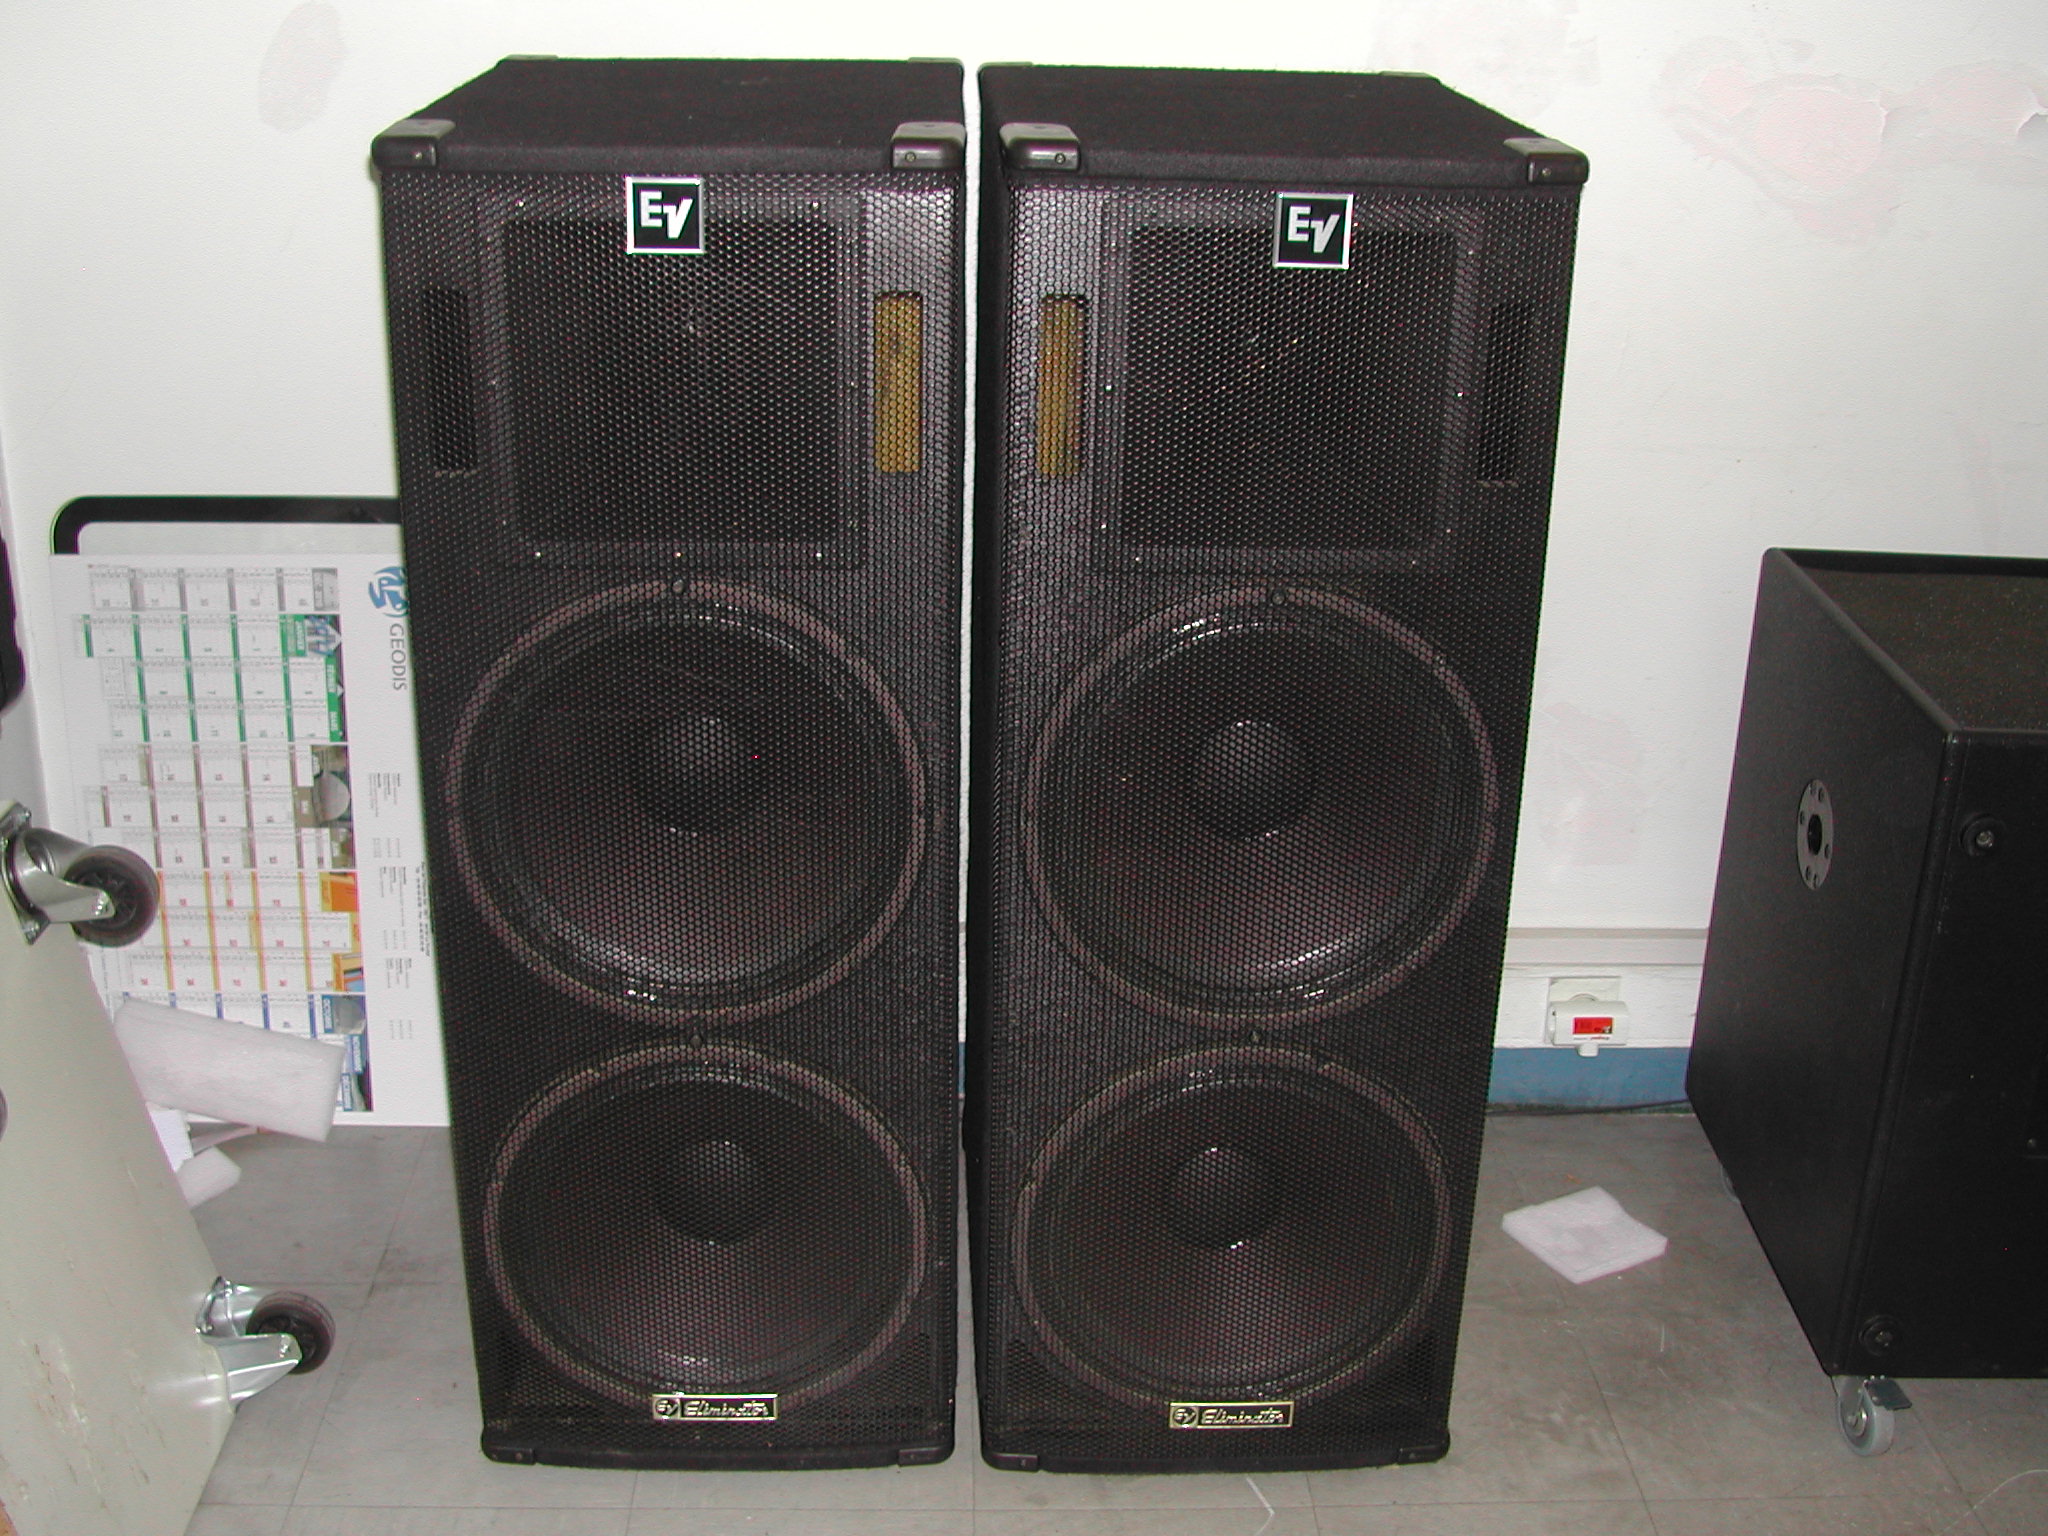 ev eliminator speakers